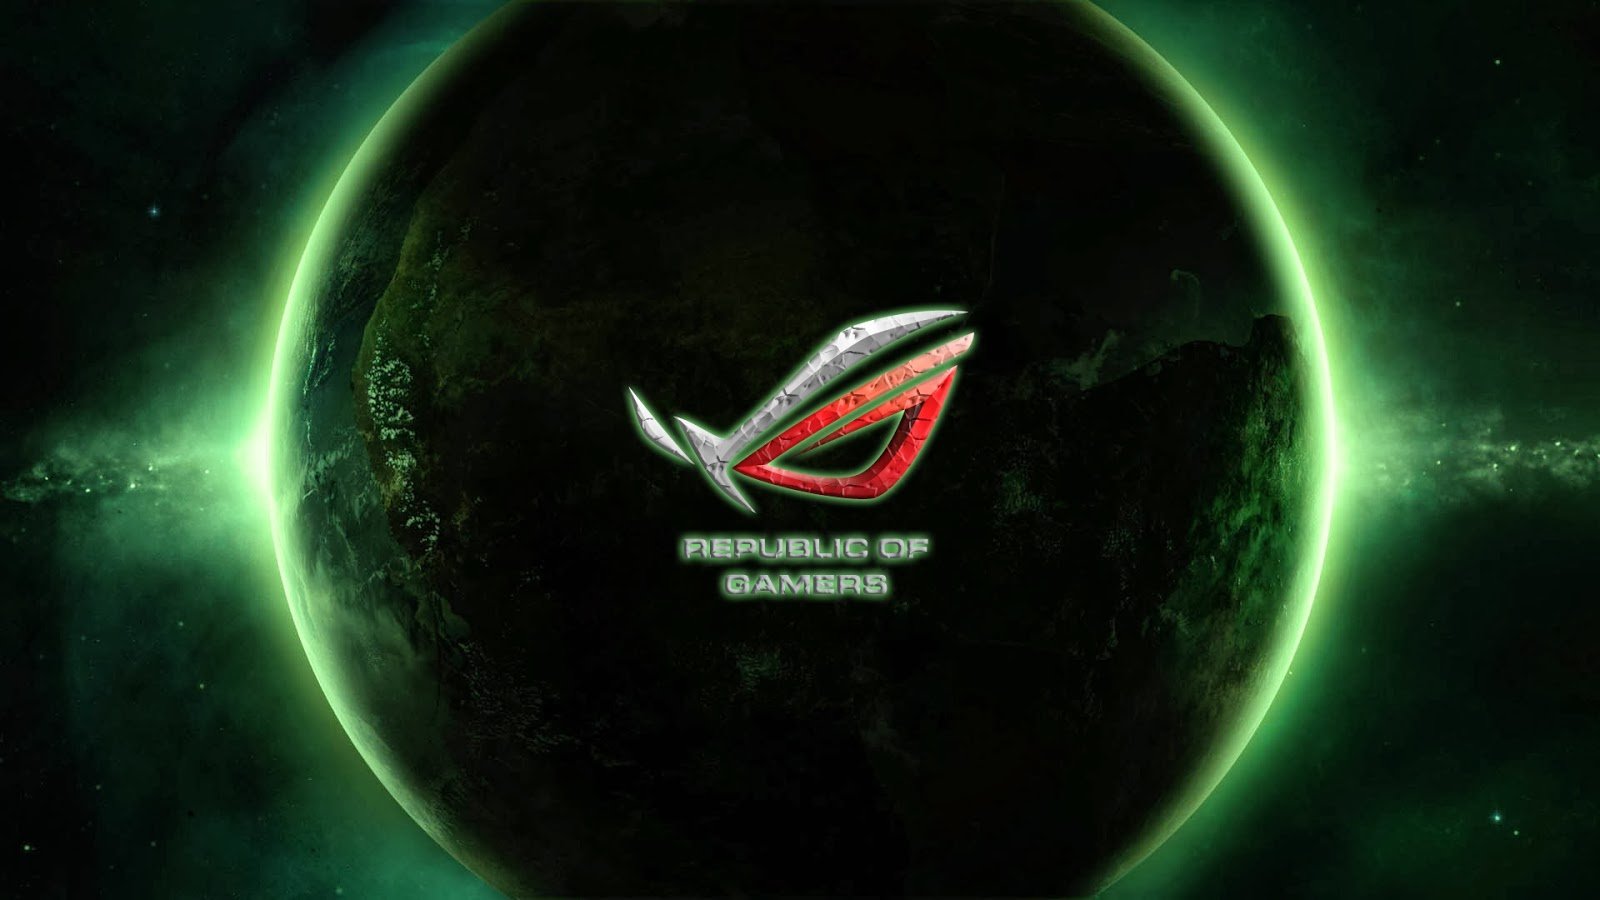 Asu Republic of Gamers Logo Brand Space Planet Widescreen HD Wallpaper